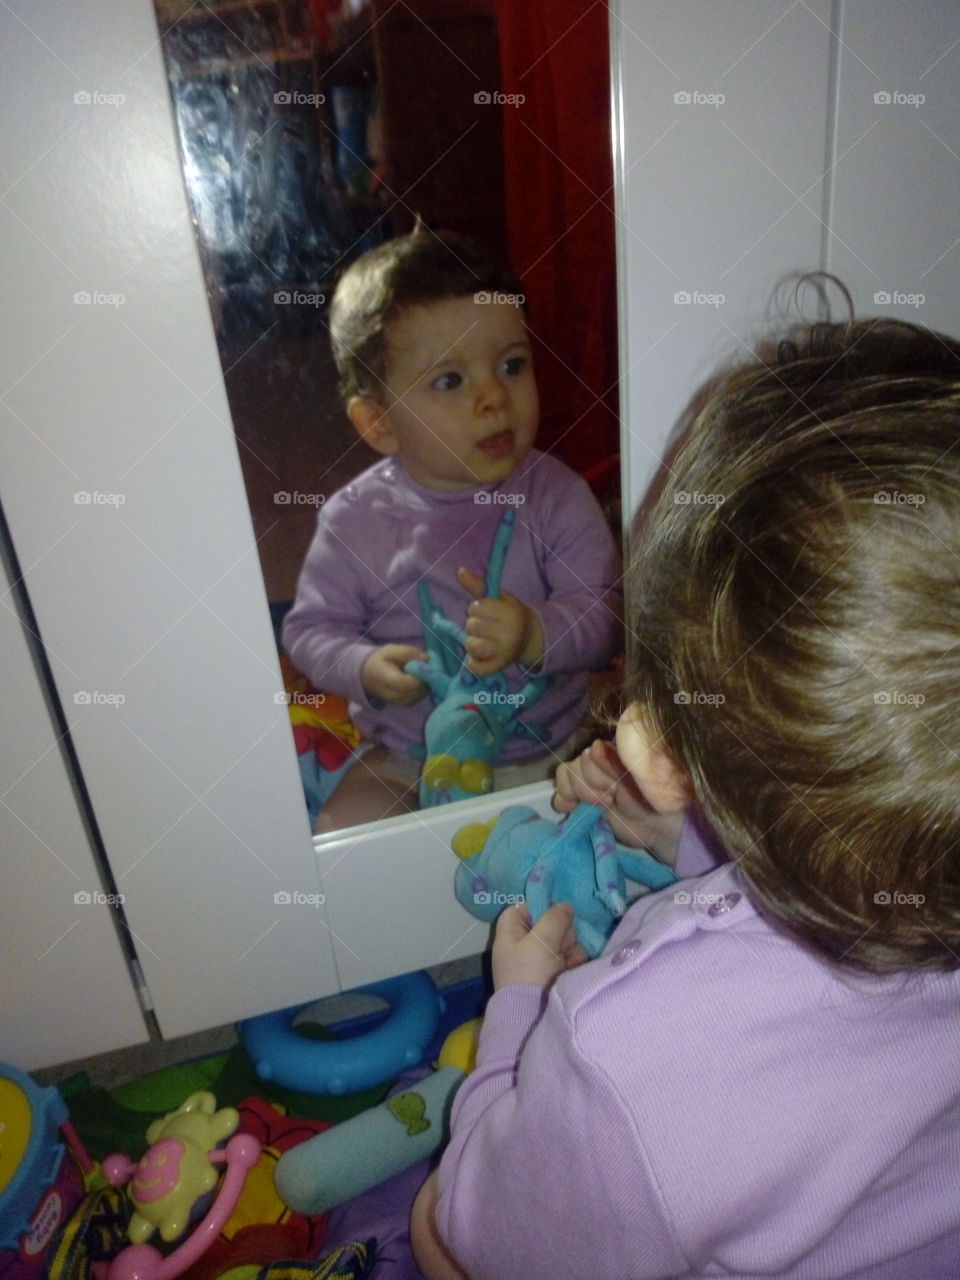 baby mirror